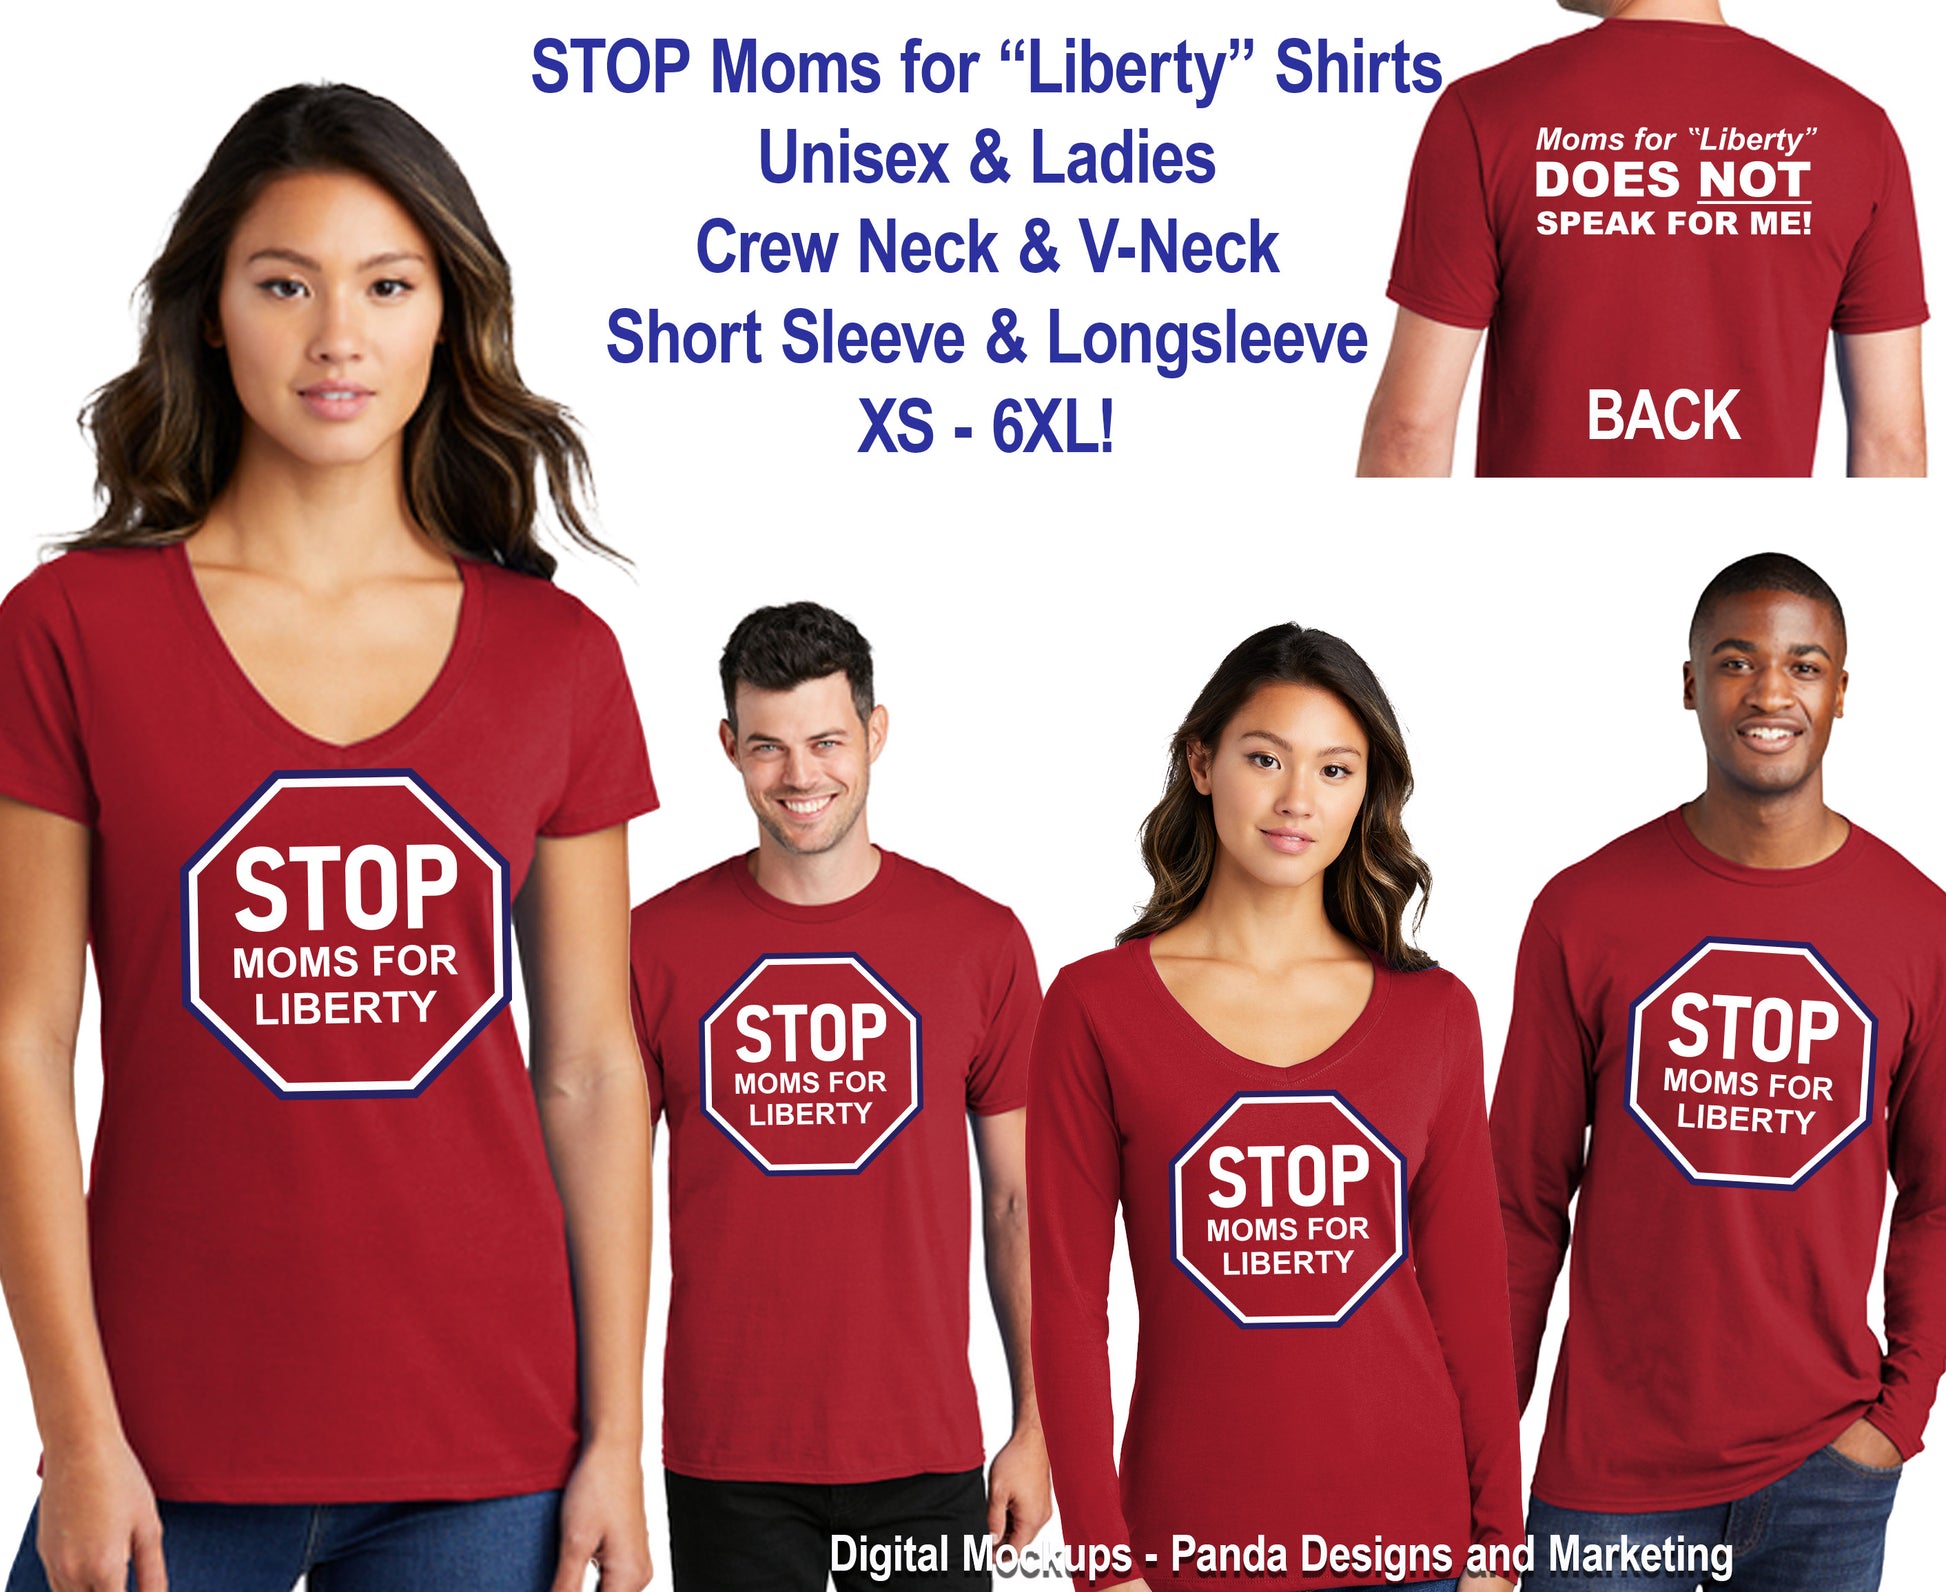 Modal T-Shirts for Women, Long Sleeve & Short Sleeve